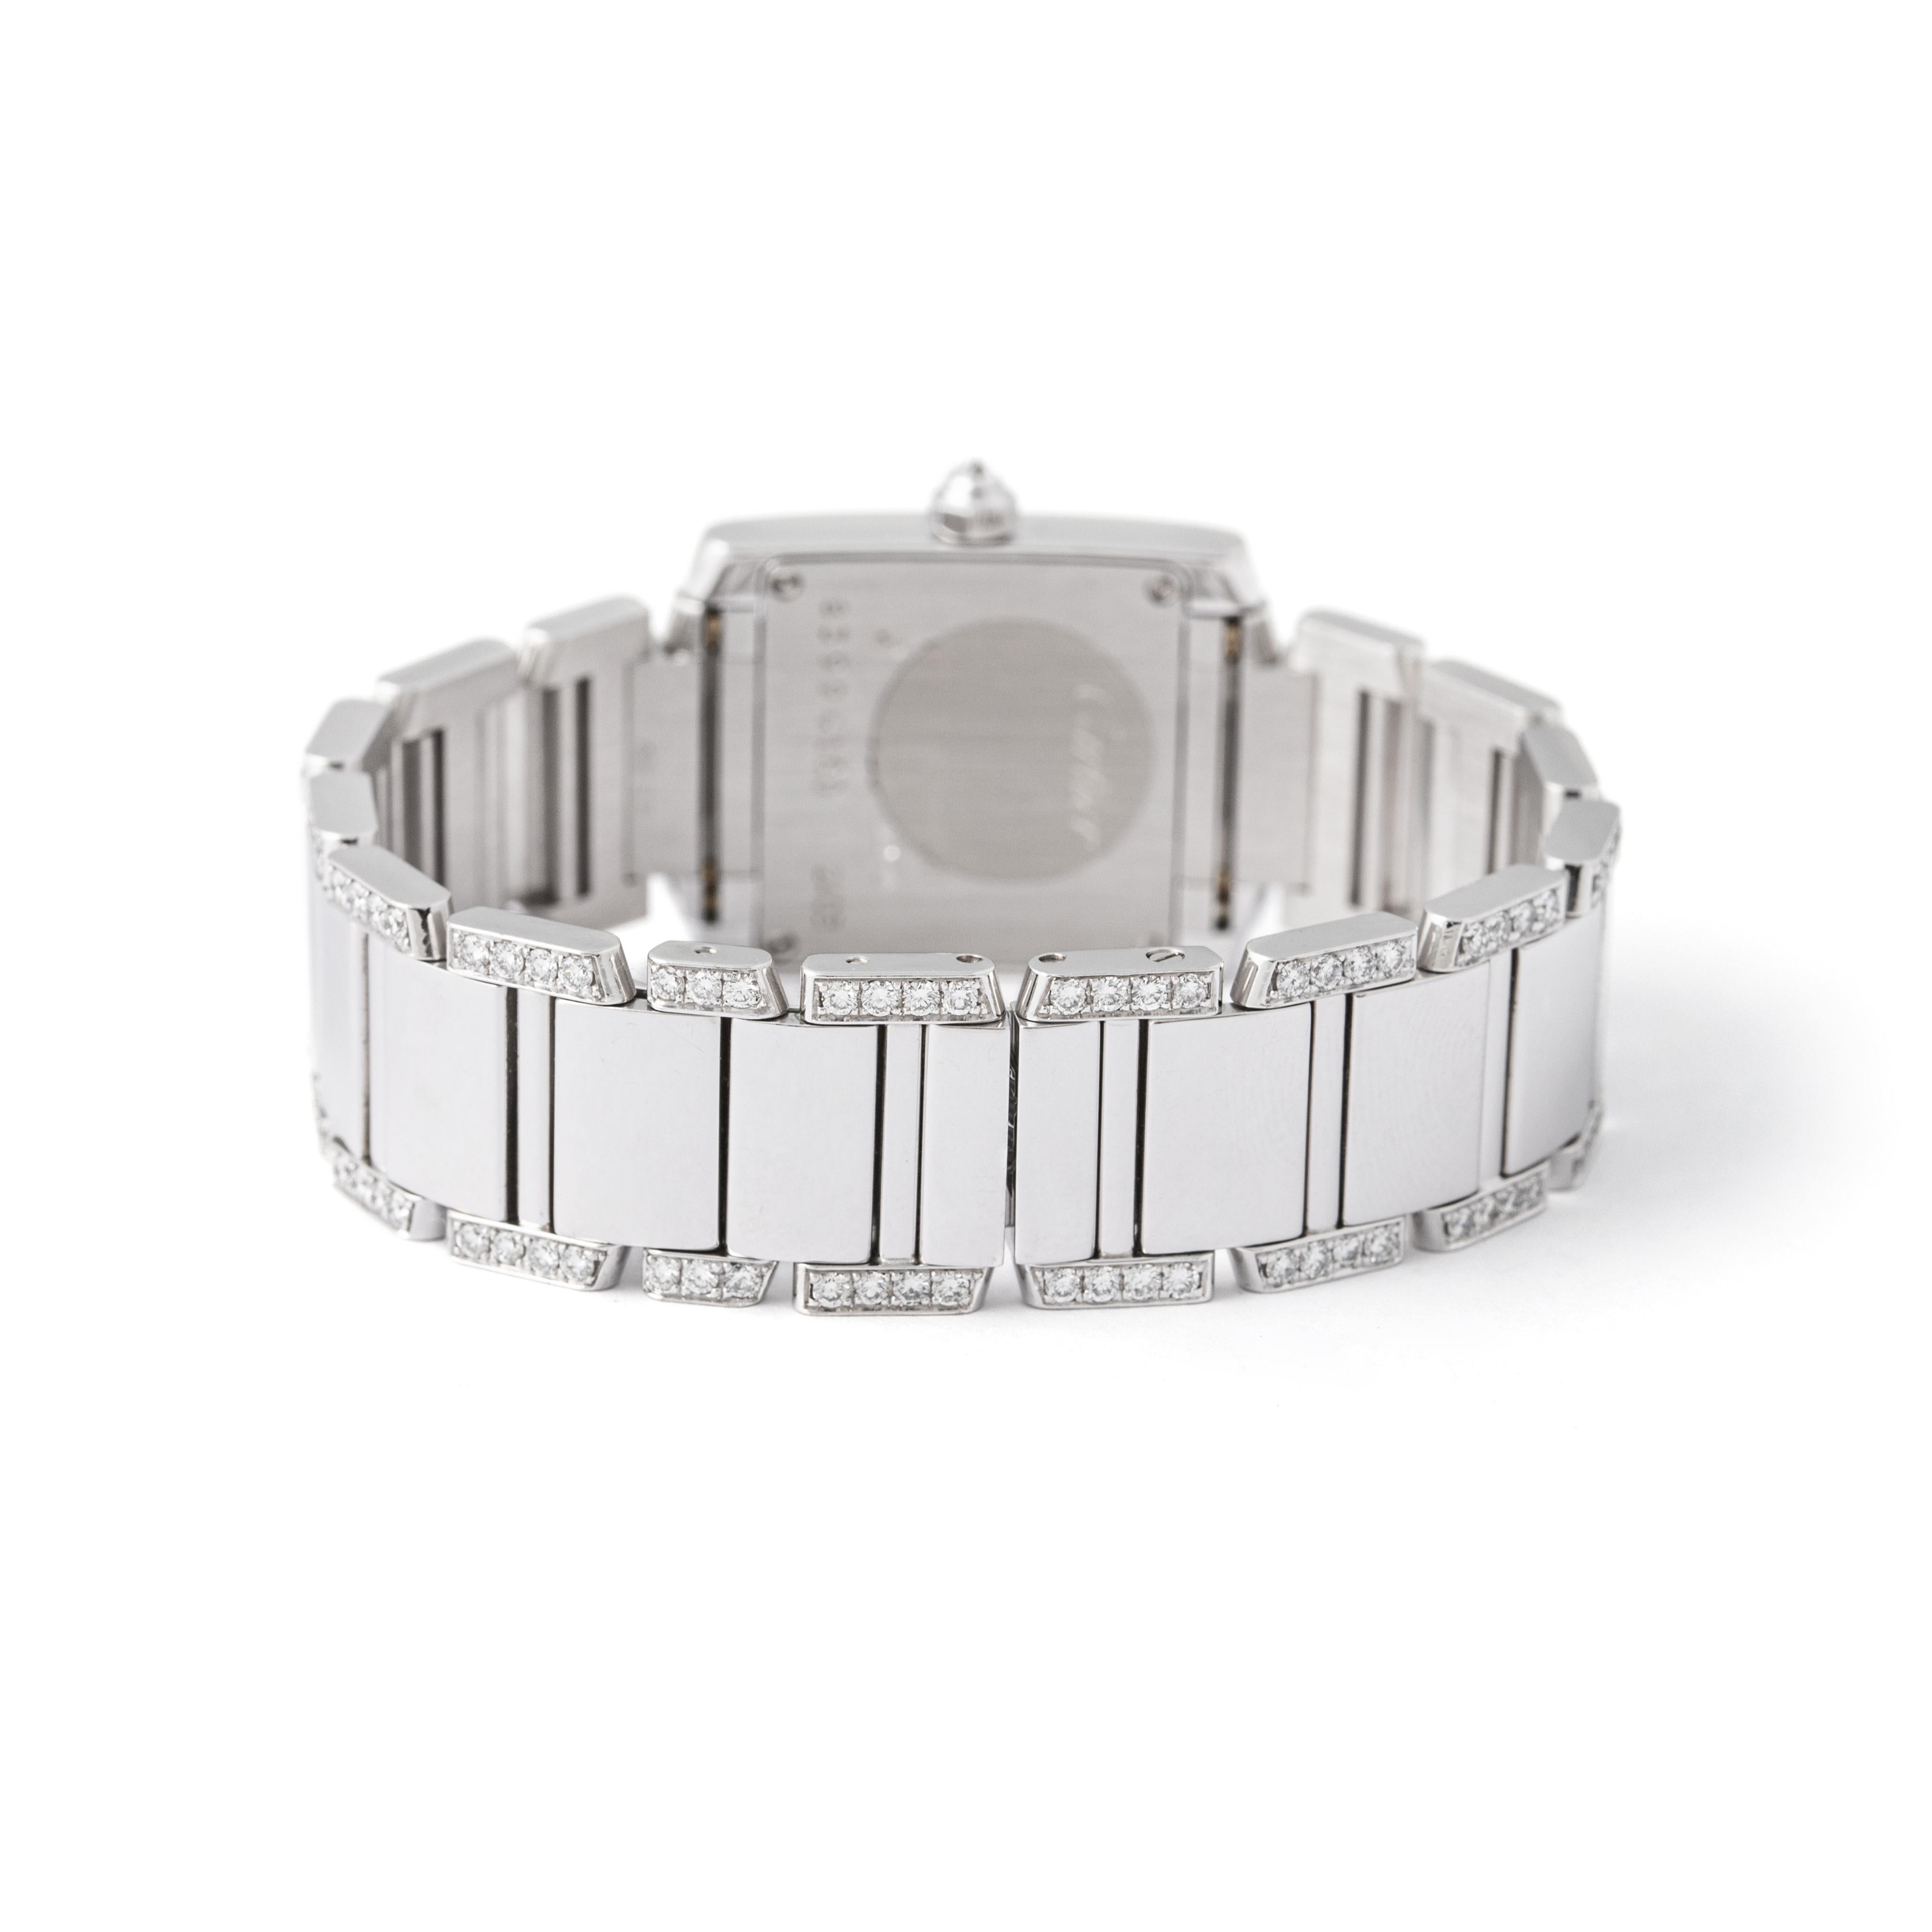 Cartier 'Tank Francaise' White Gold 18K Diamond Ladies Watch For Sale 2